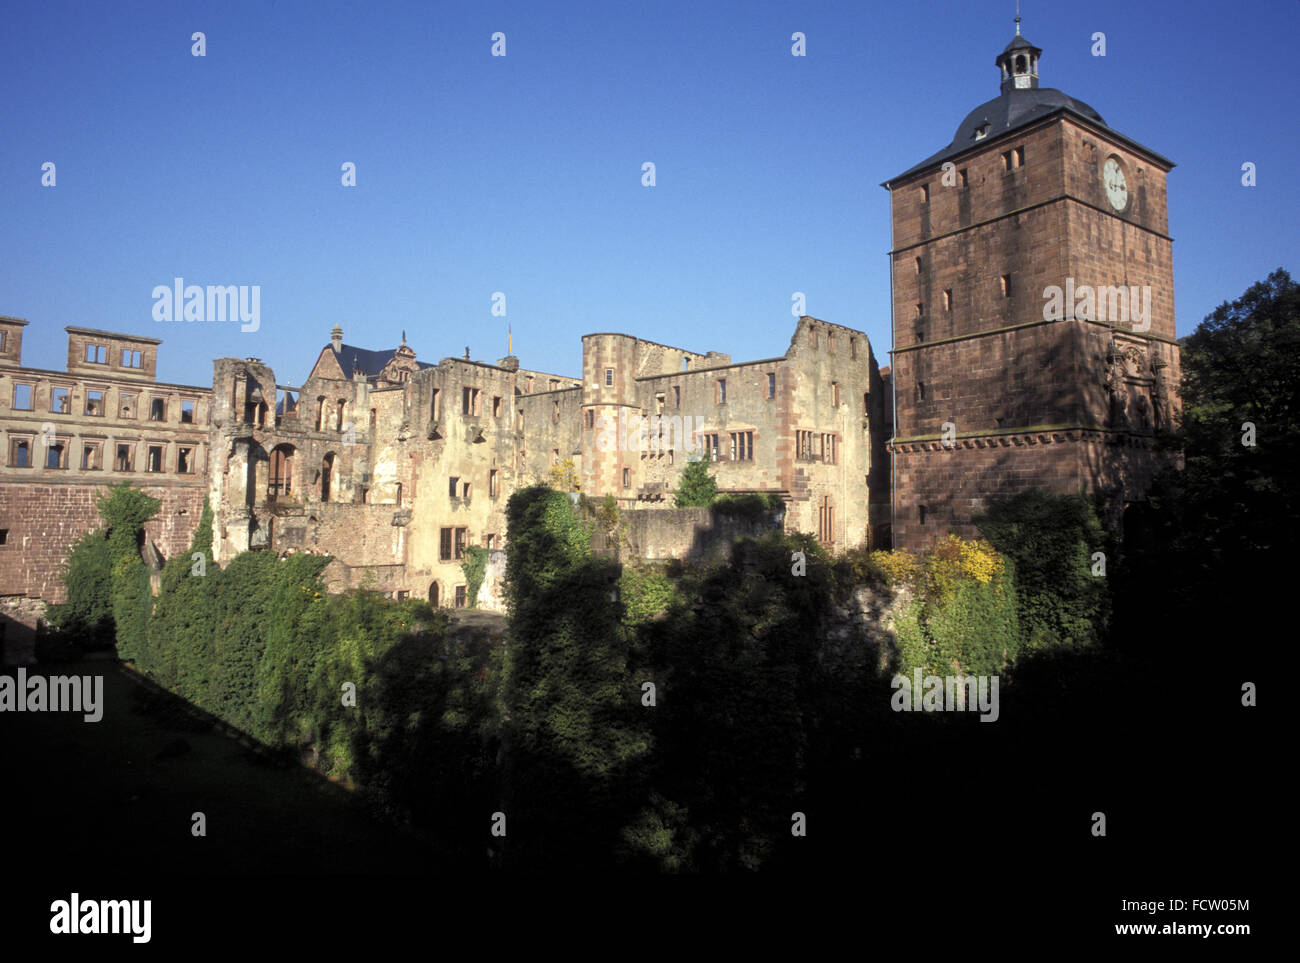 DEU, Germania, Heidelberg, il castello. DEU, Deutschland, Heidelberg, Das Schloss. Foto Stock